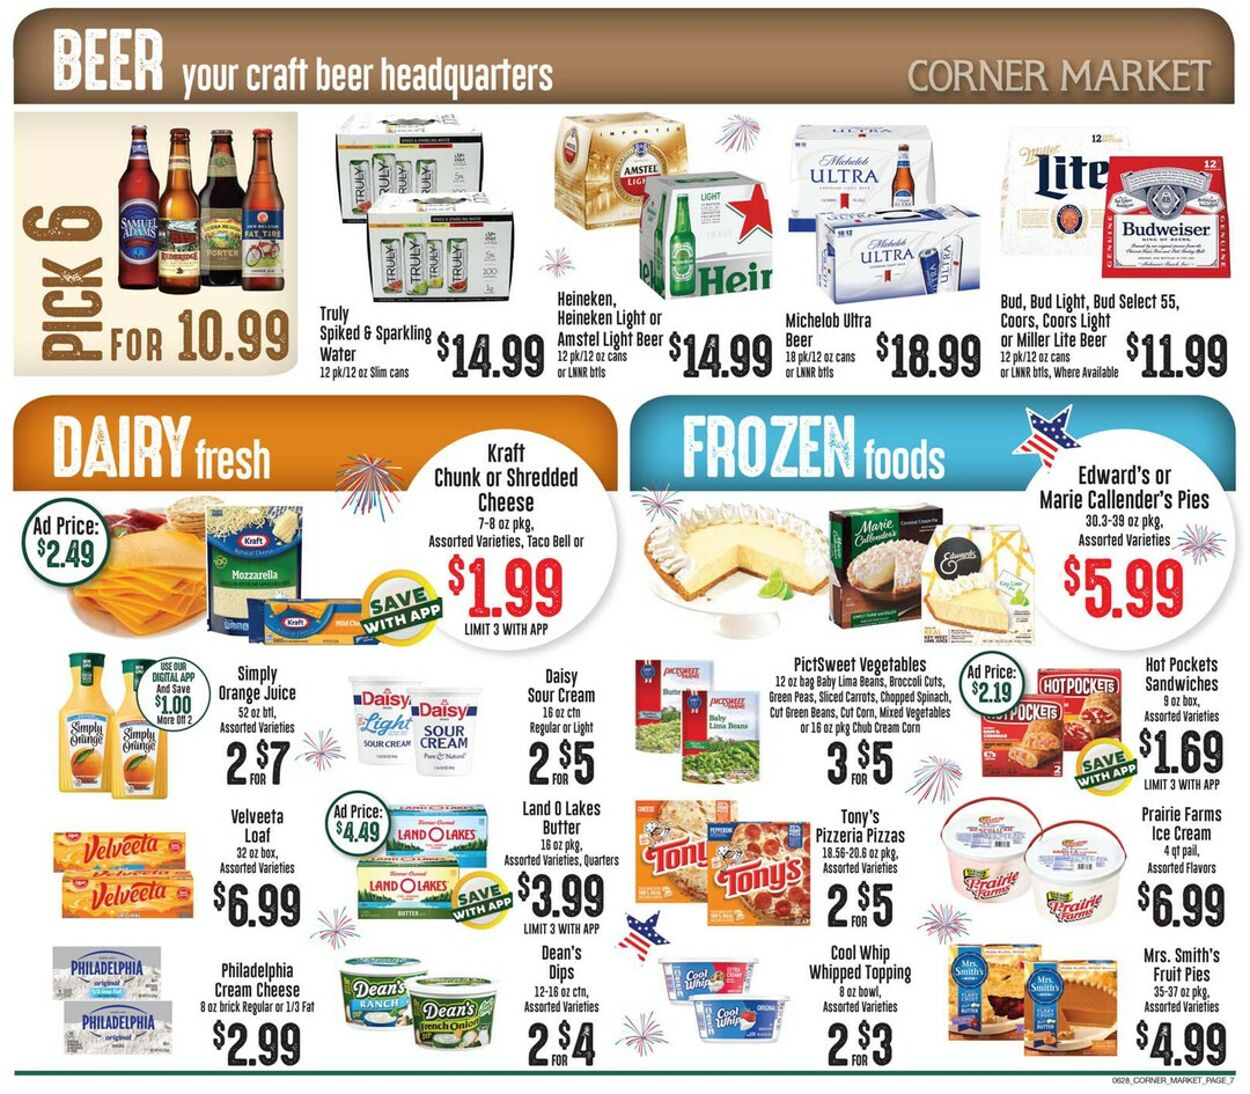 Weekly ad Corner Market 06/28/2023 - 07/04/2023